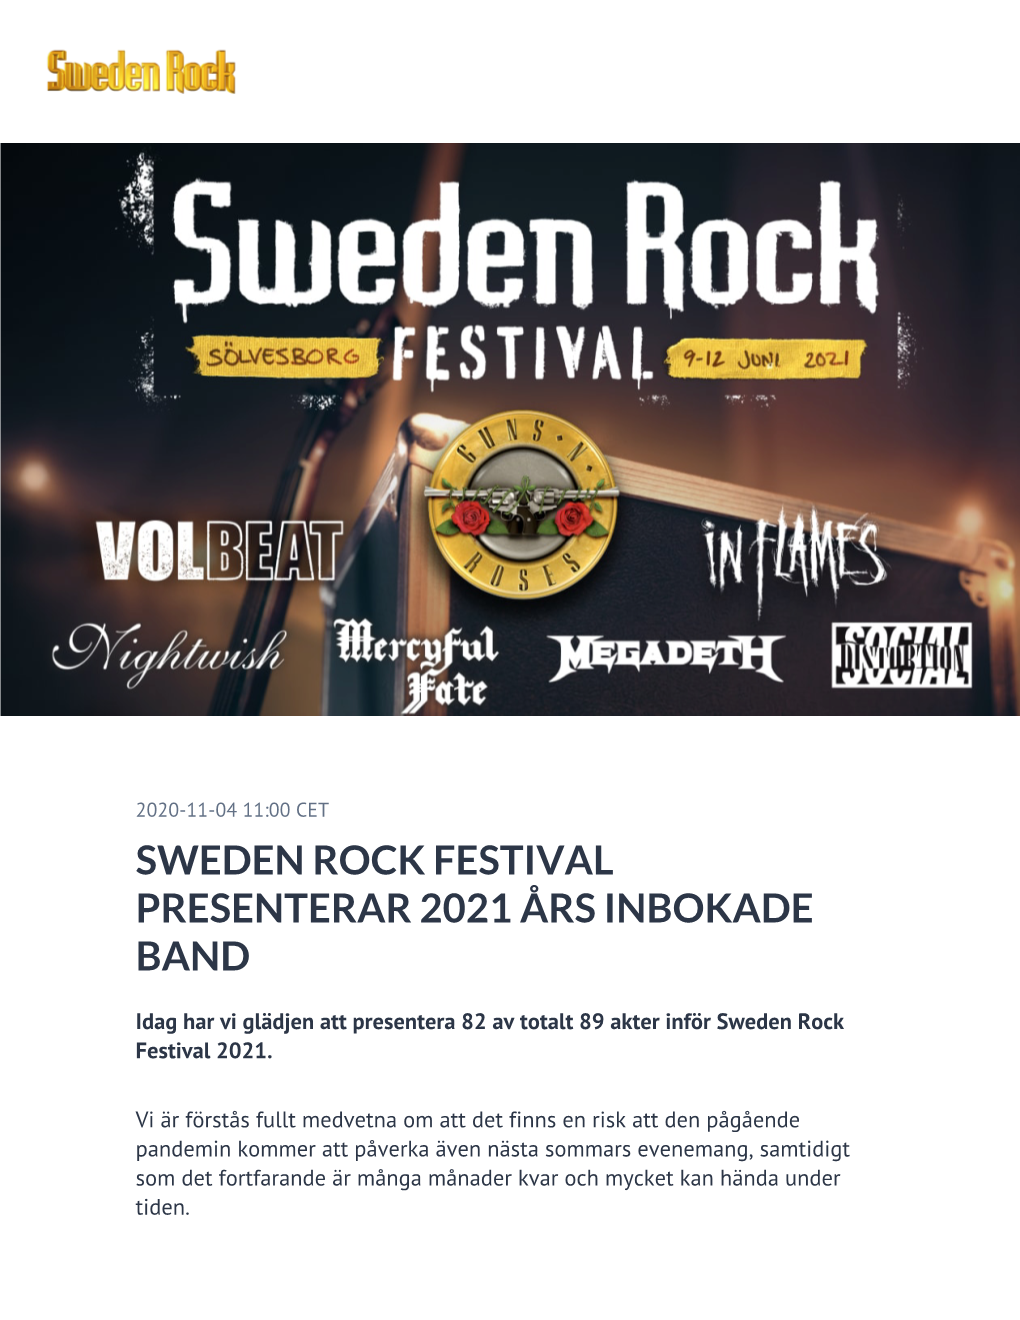 Sweden Rock Festival Presenterar 2021 Års Inbokade Band